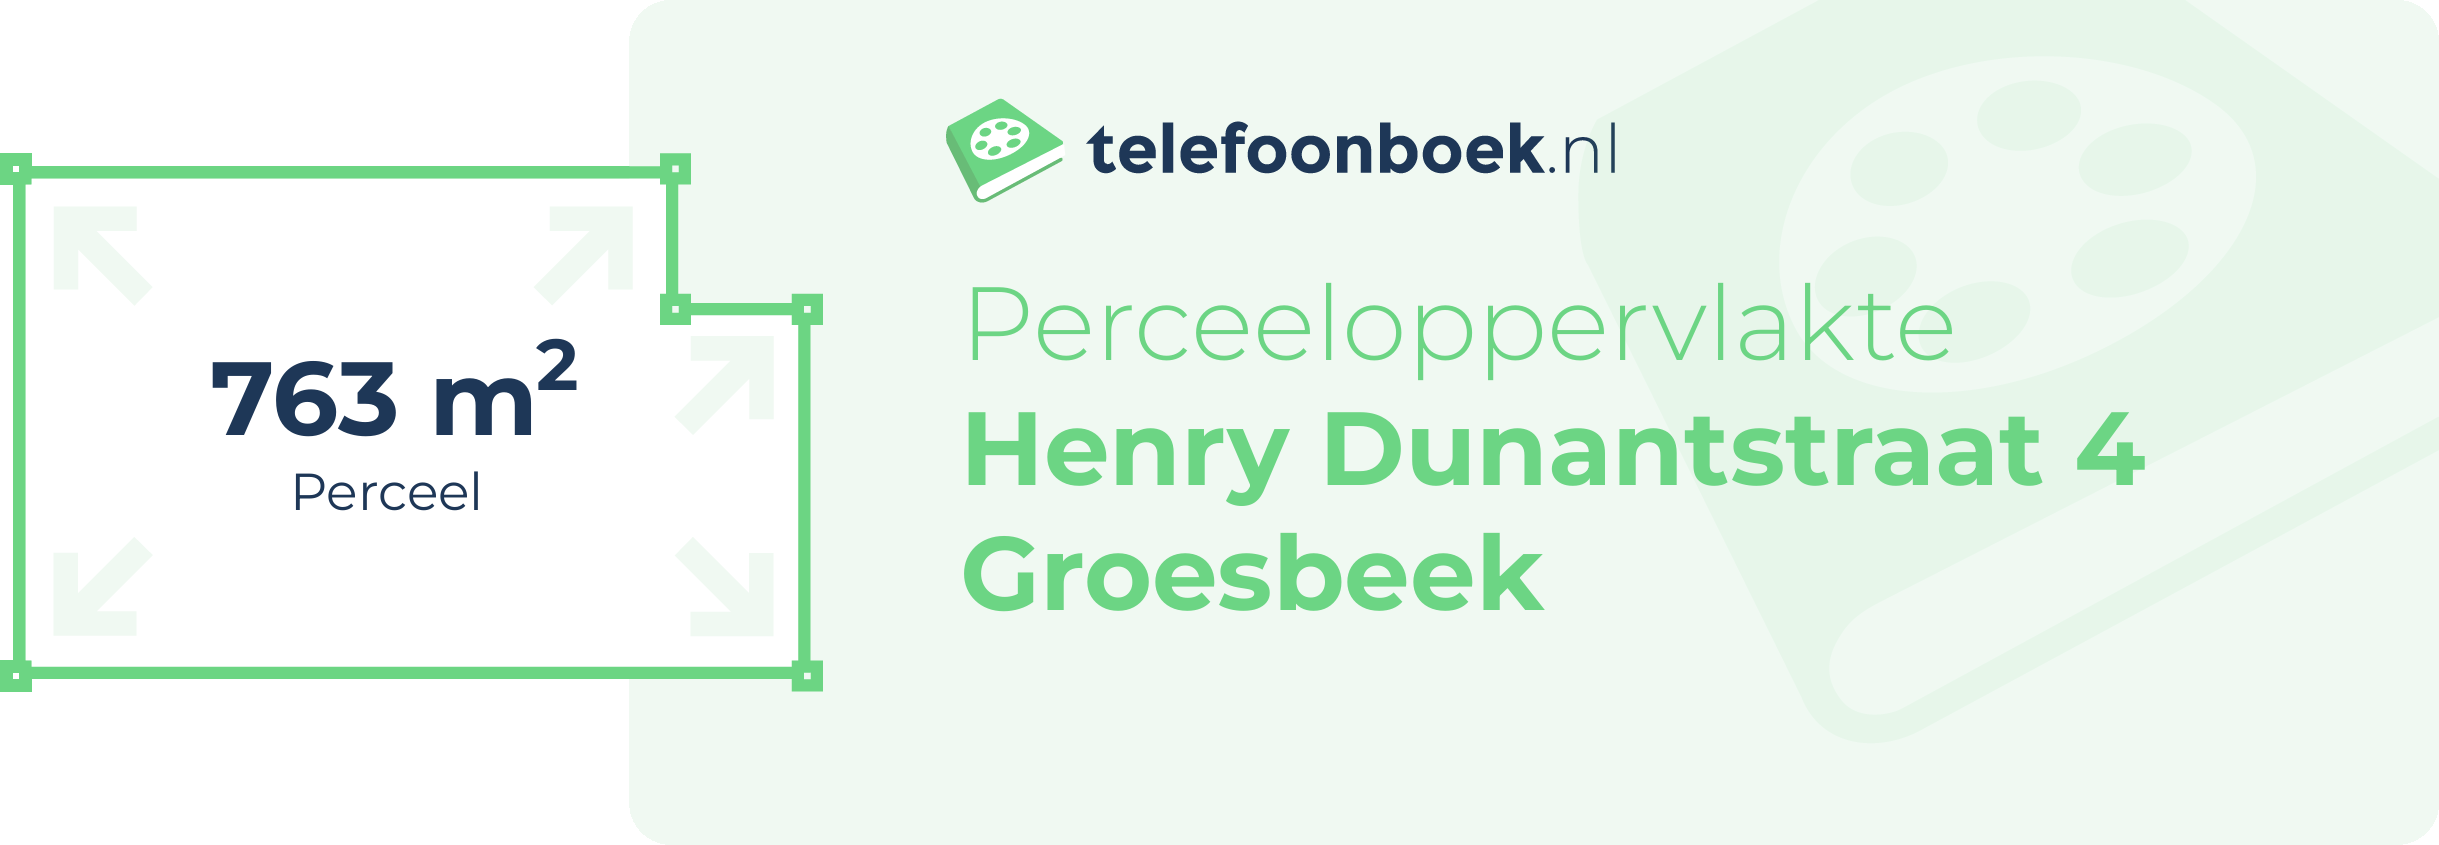 Perceeloppervlakte Henry Dunantstraat 4 Groesbeek